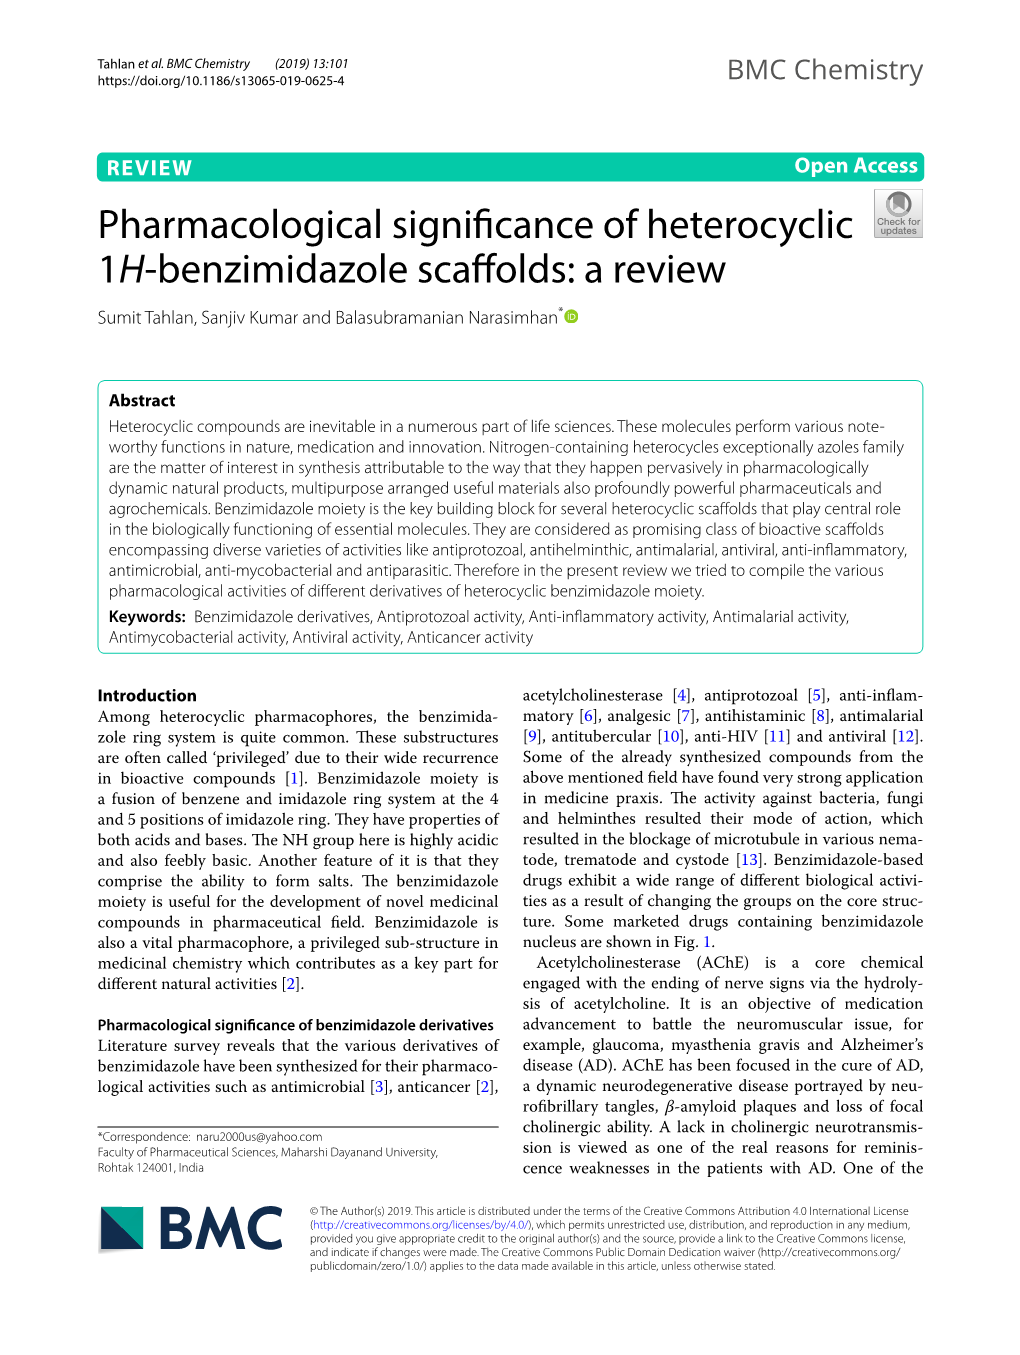 Pharmacological Significance of Heterocyclic 1H-Benzimidazole